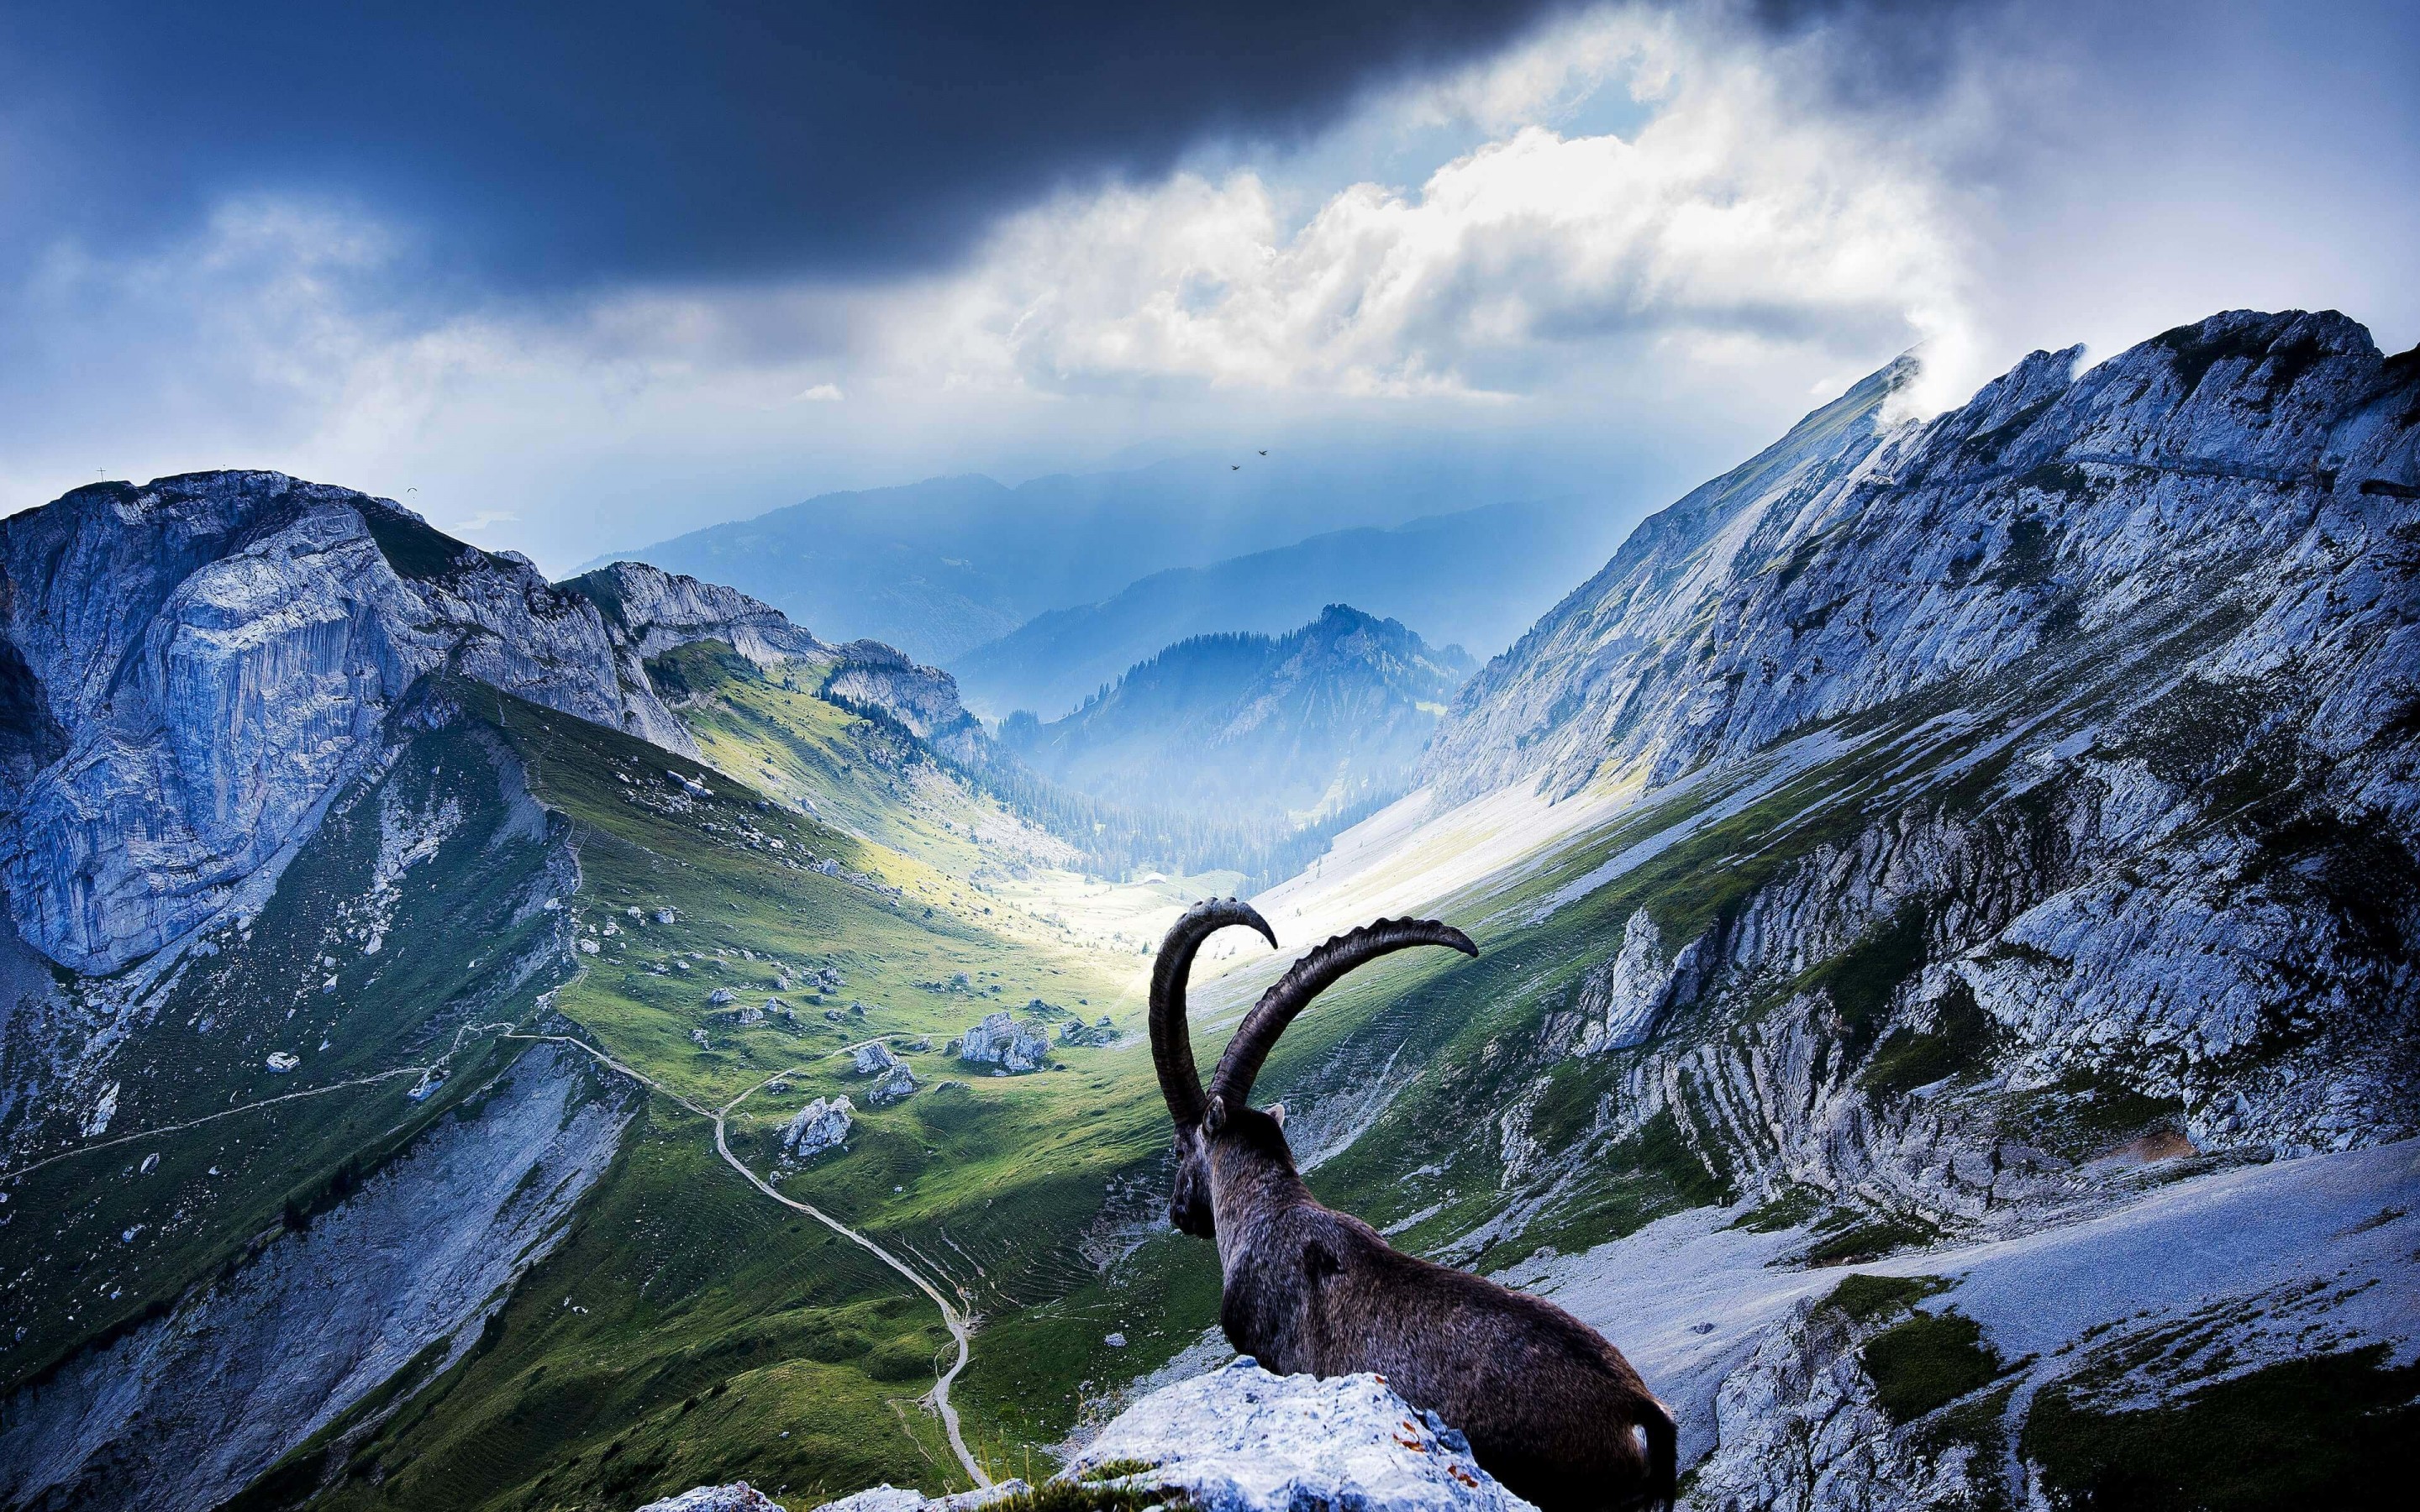 Goat at Pilatus, Switzerland Wallpaper for Desktop 2880x1800